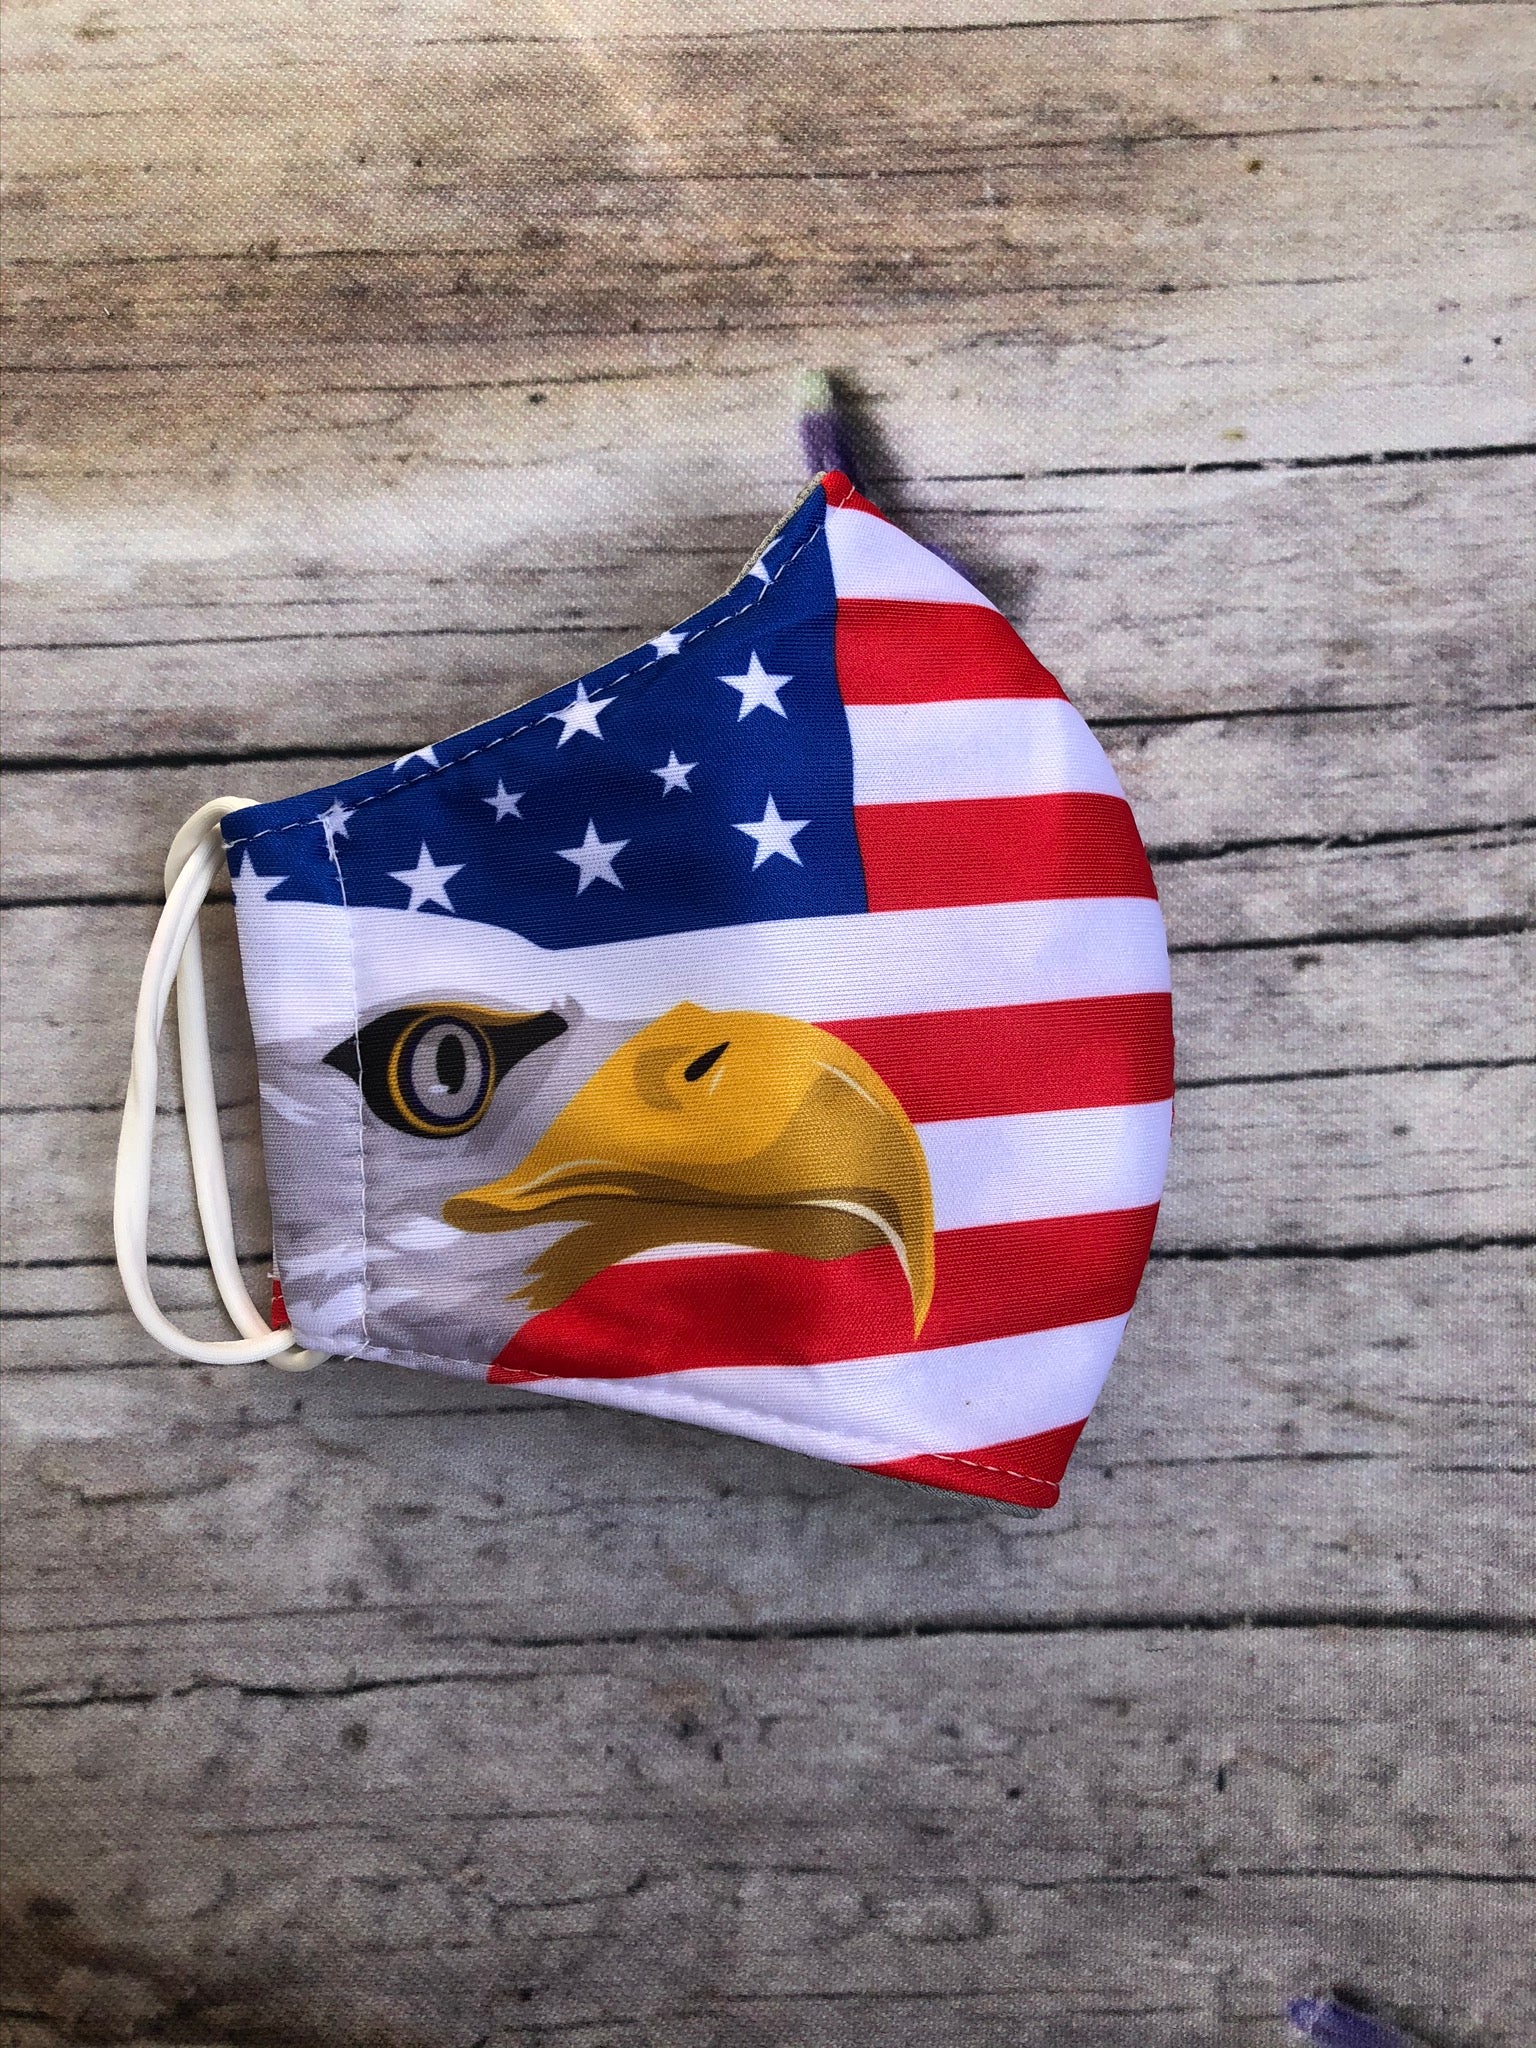 USA print with eagle on American flag mask for adult